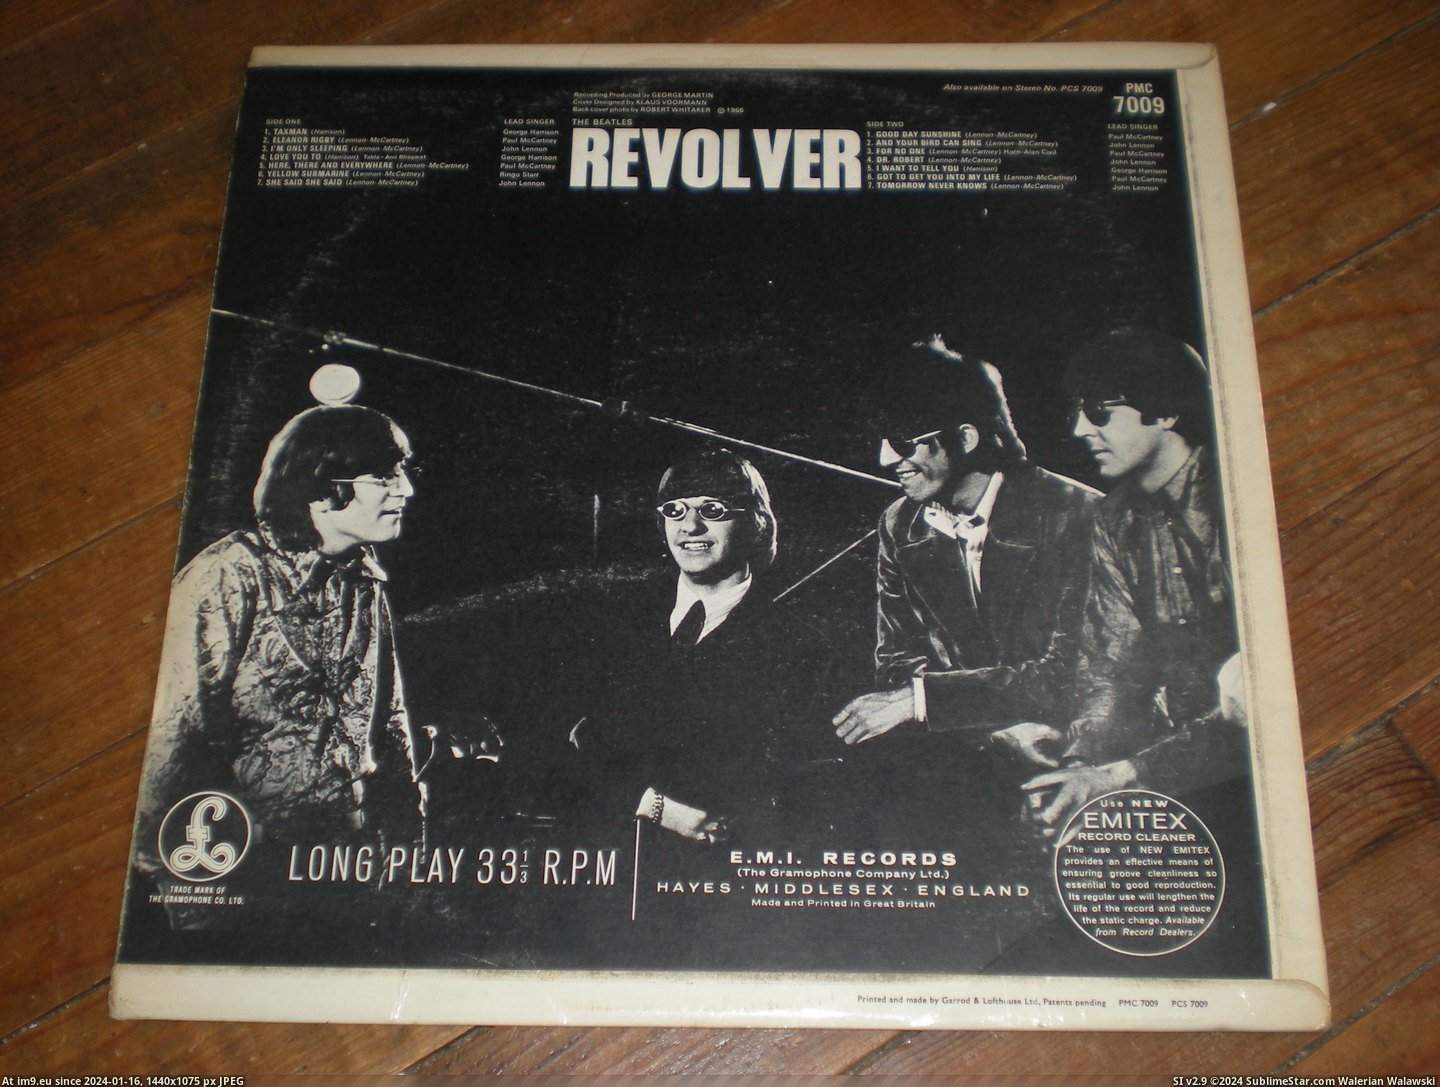  #Revolver  Revolver 15-07-14 3 Pic. (Image of album new 1))